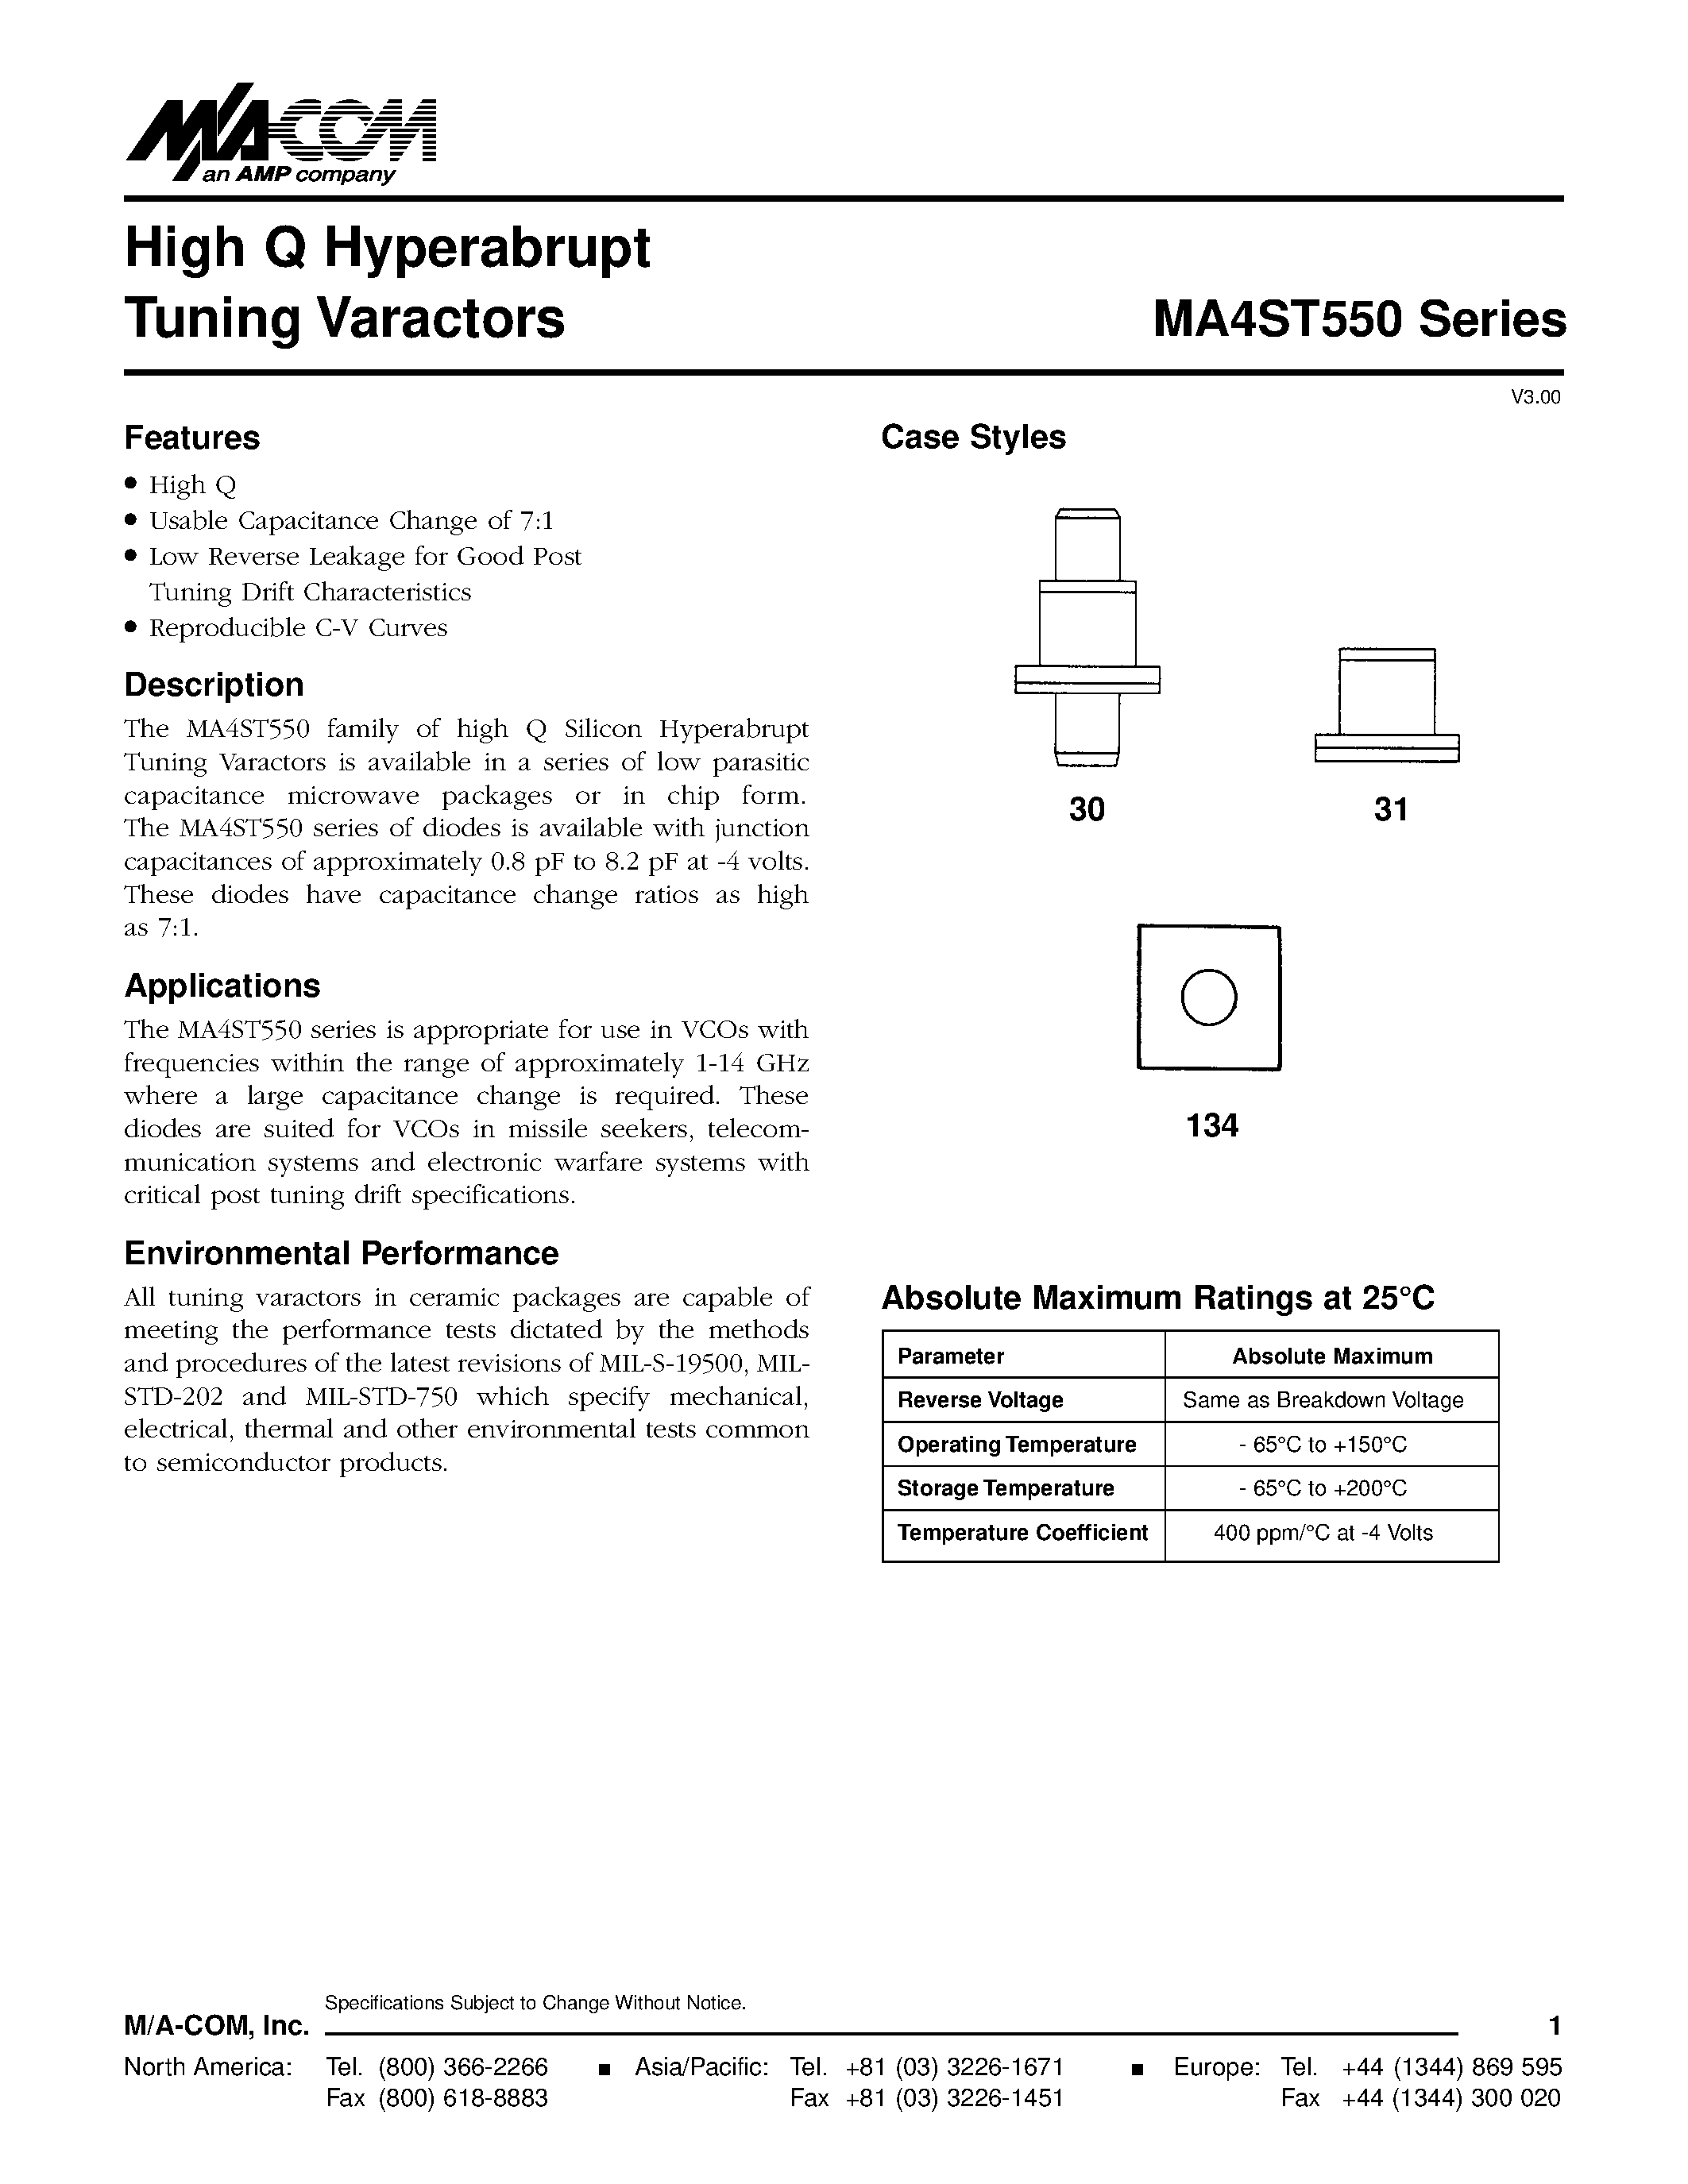 Datasheet MA4ST562 - High Q Hyperabrupt Tuning Varactors page 1